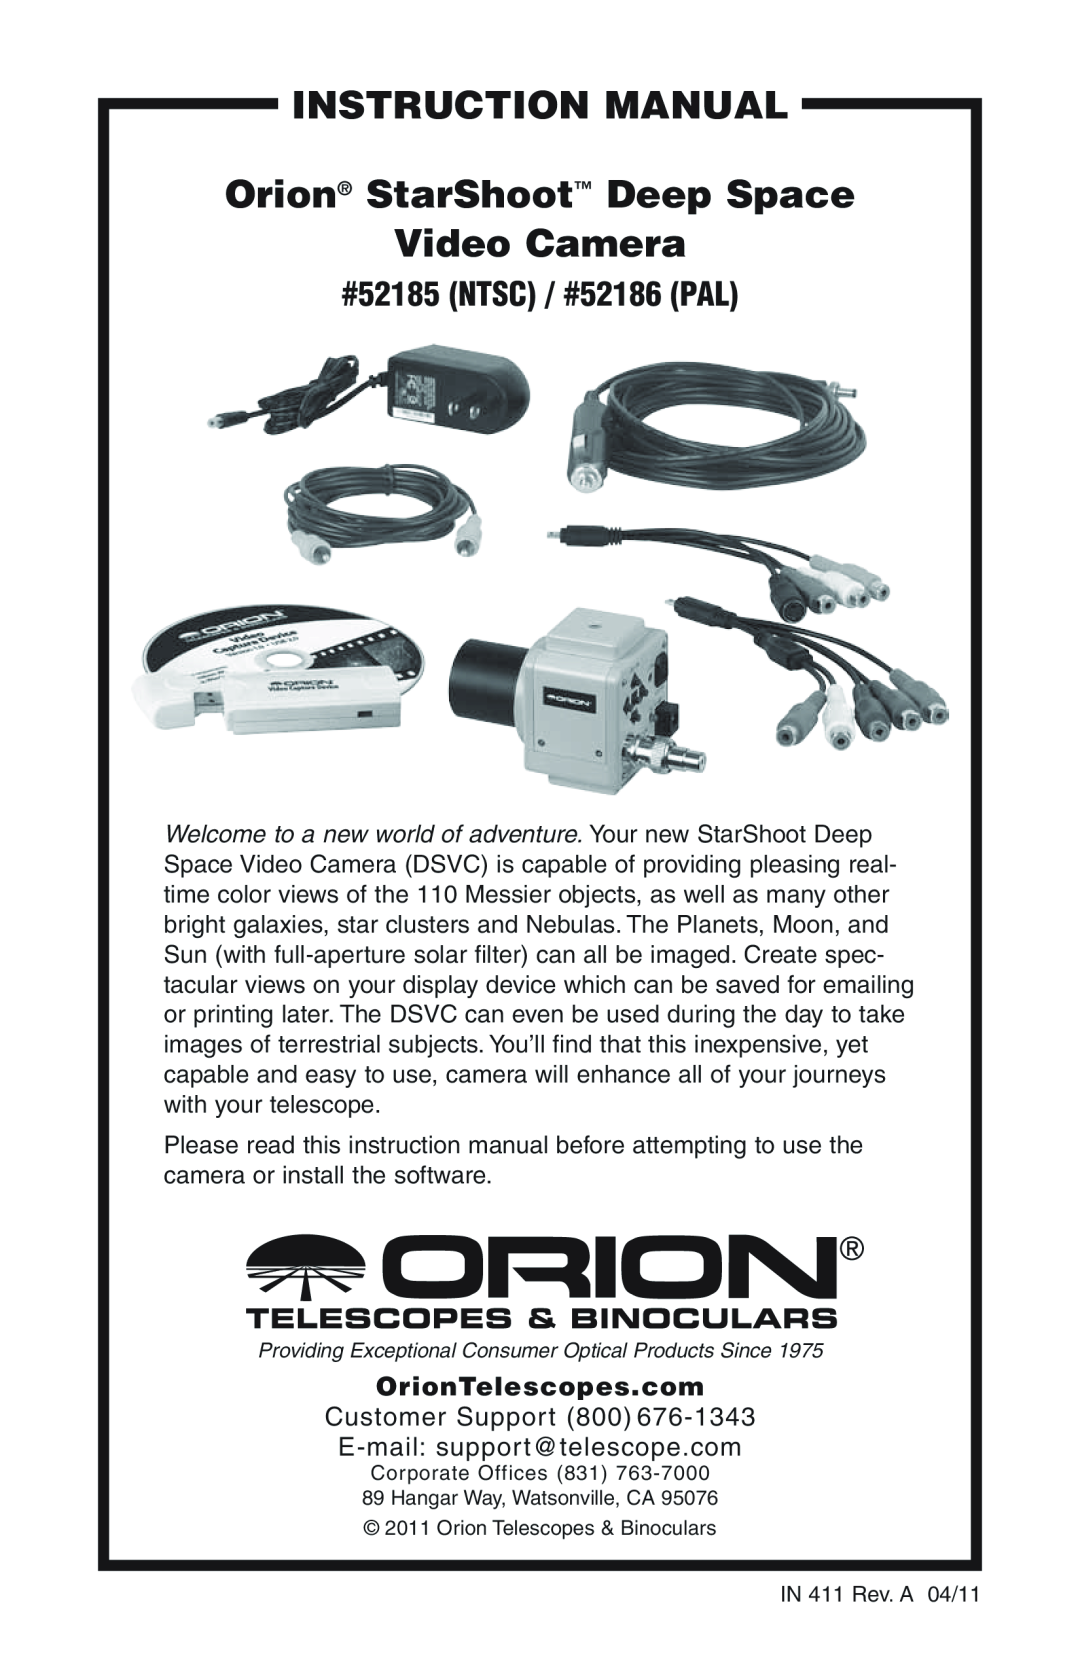 Orion instruction manual #52185 NTSC / #52186 PAL, Video Camera 